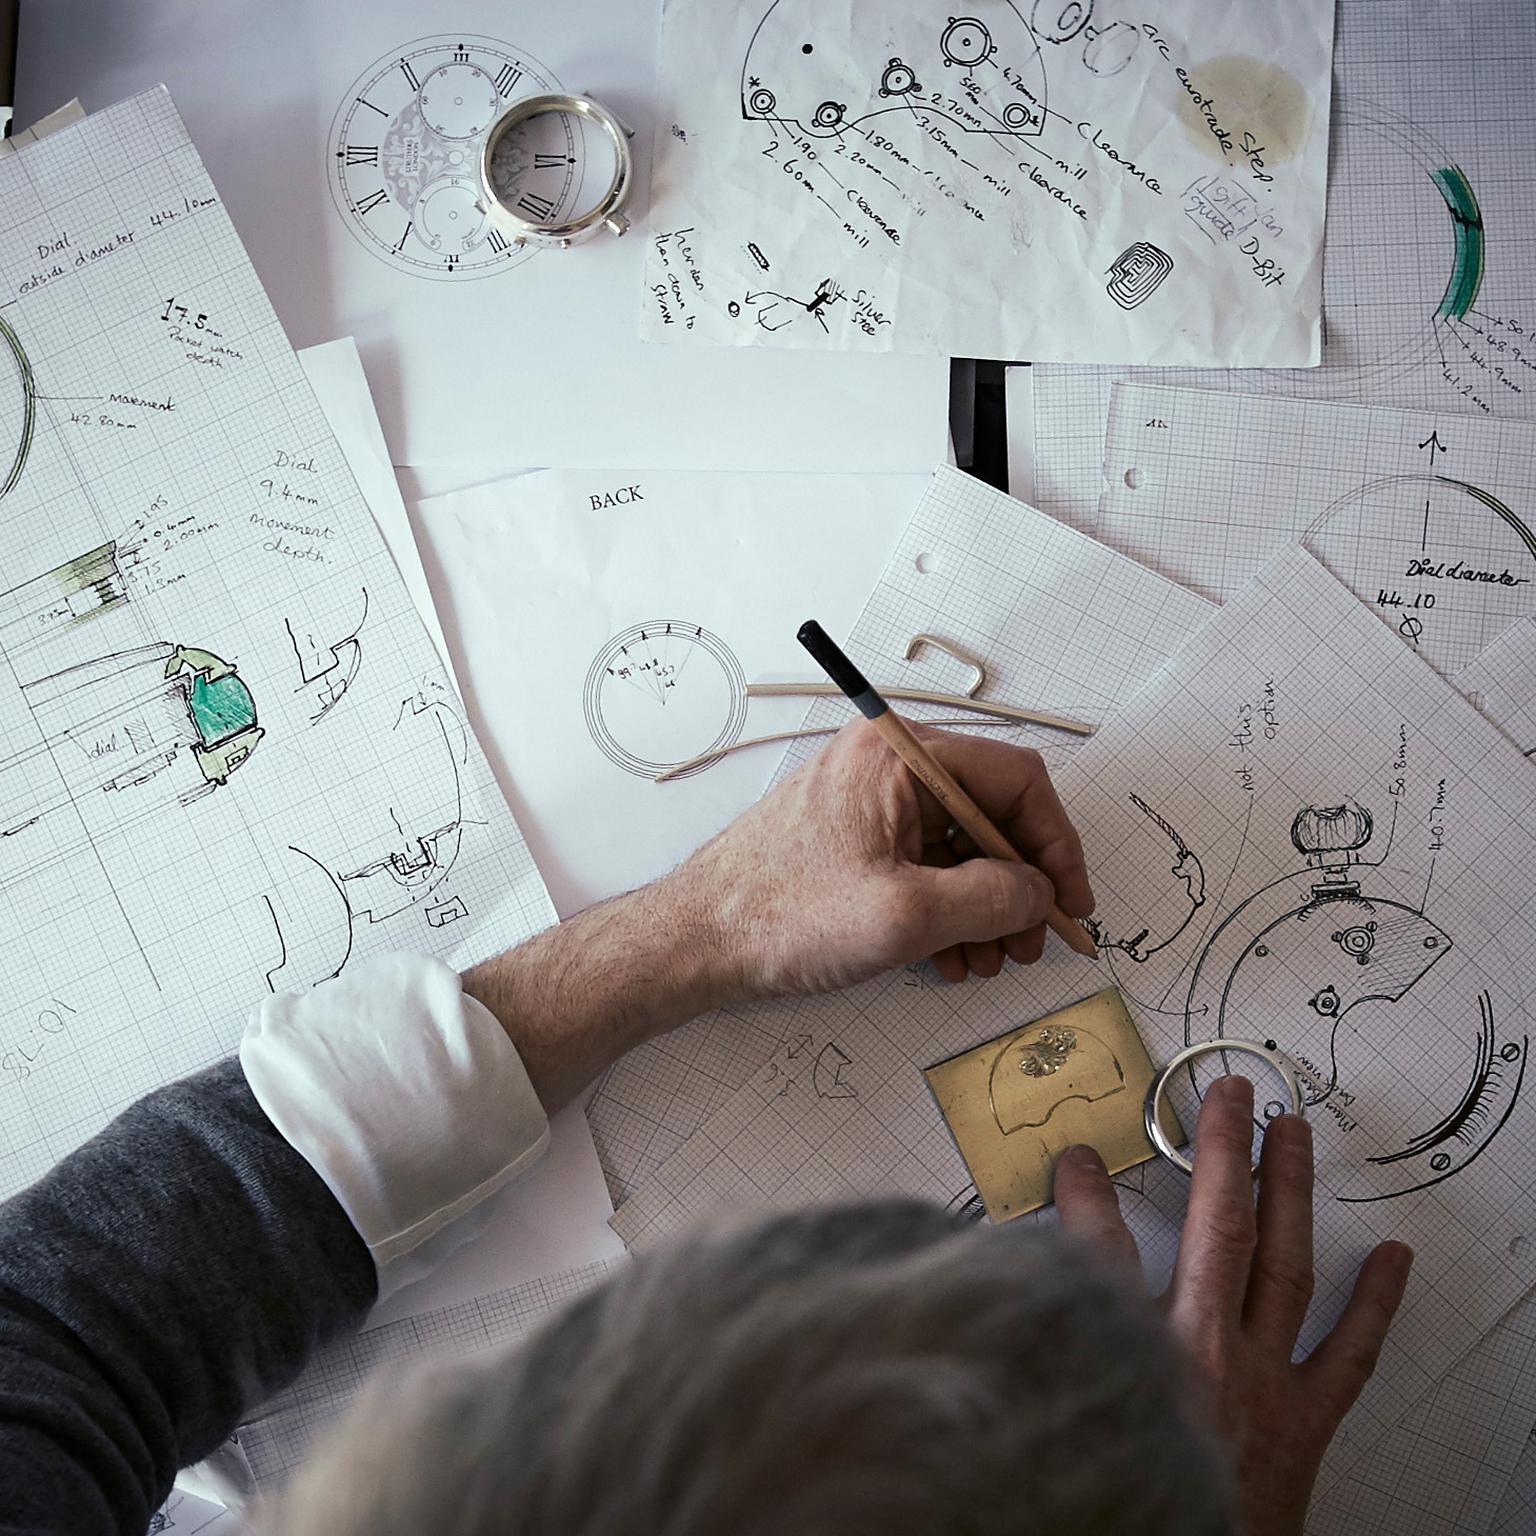 Craig Struthers designing a bespoke watch